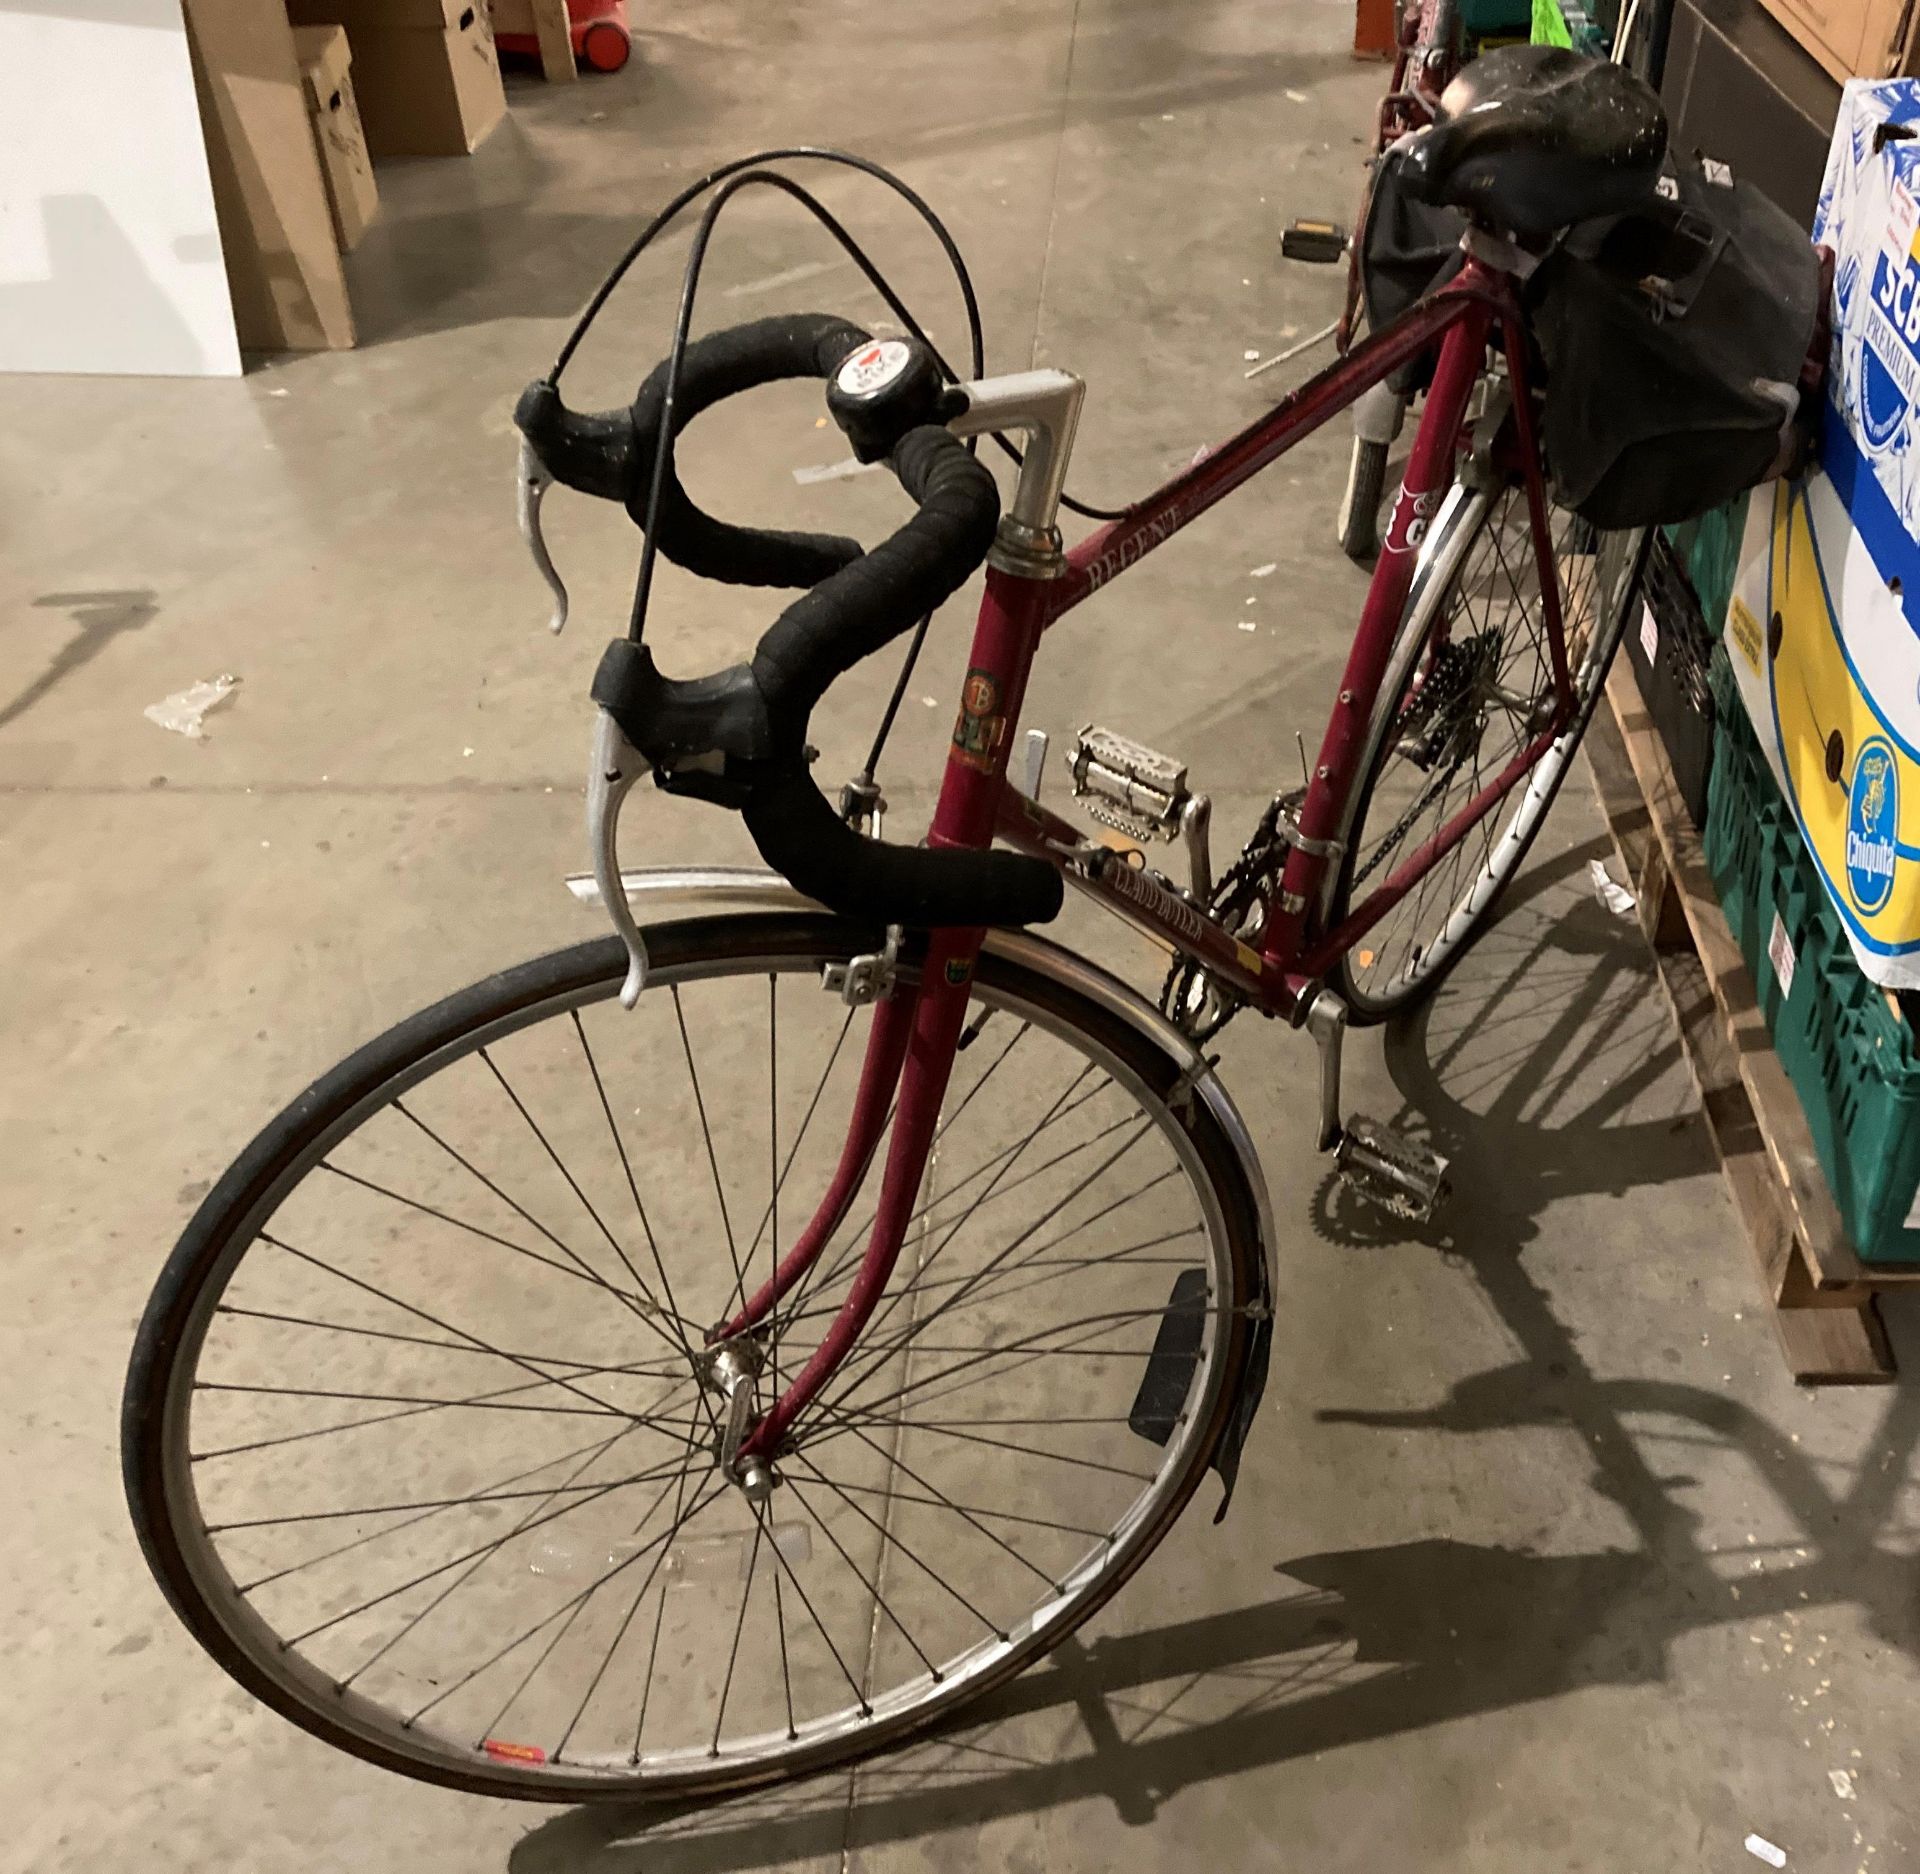 A Claude Butler Regent 12 sped racing bicycle in maroon with drop handlebars (saleroom location S1) - Image 5 of 5